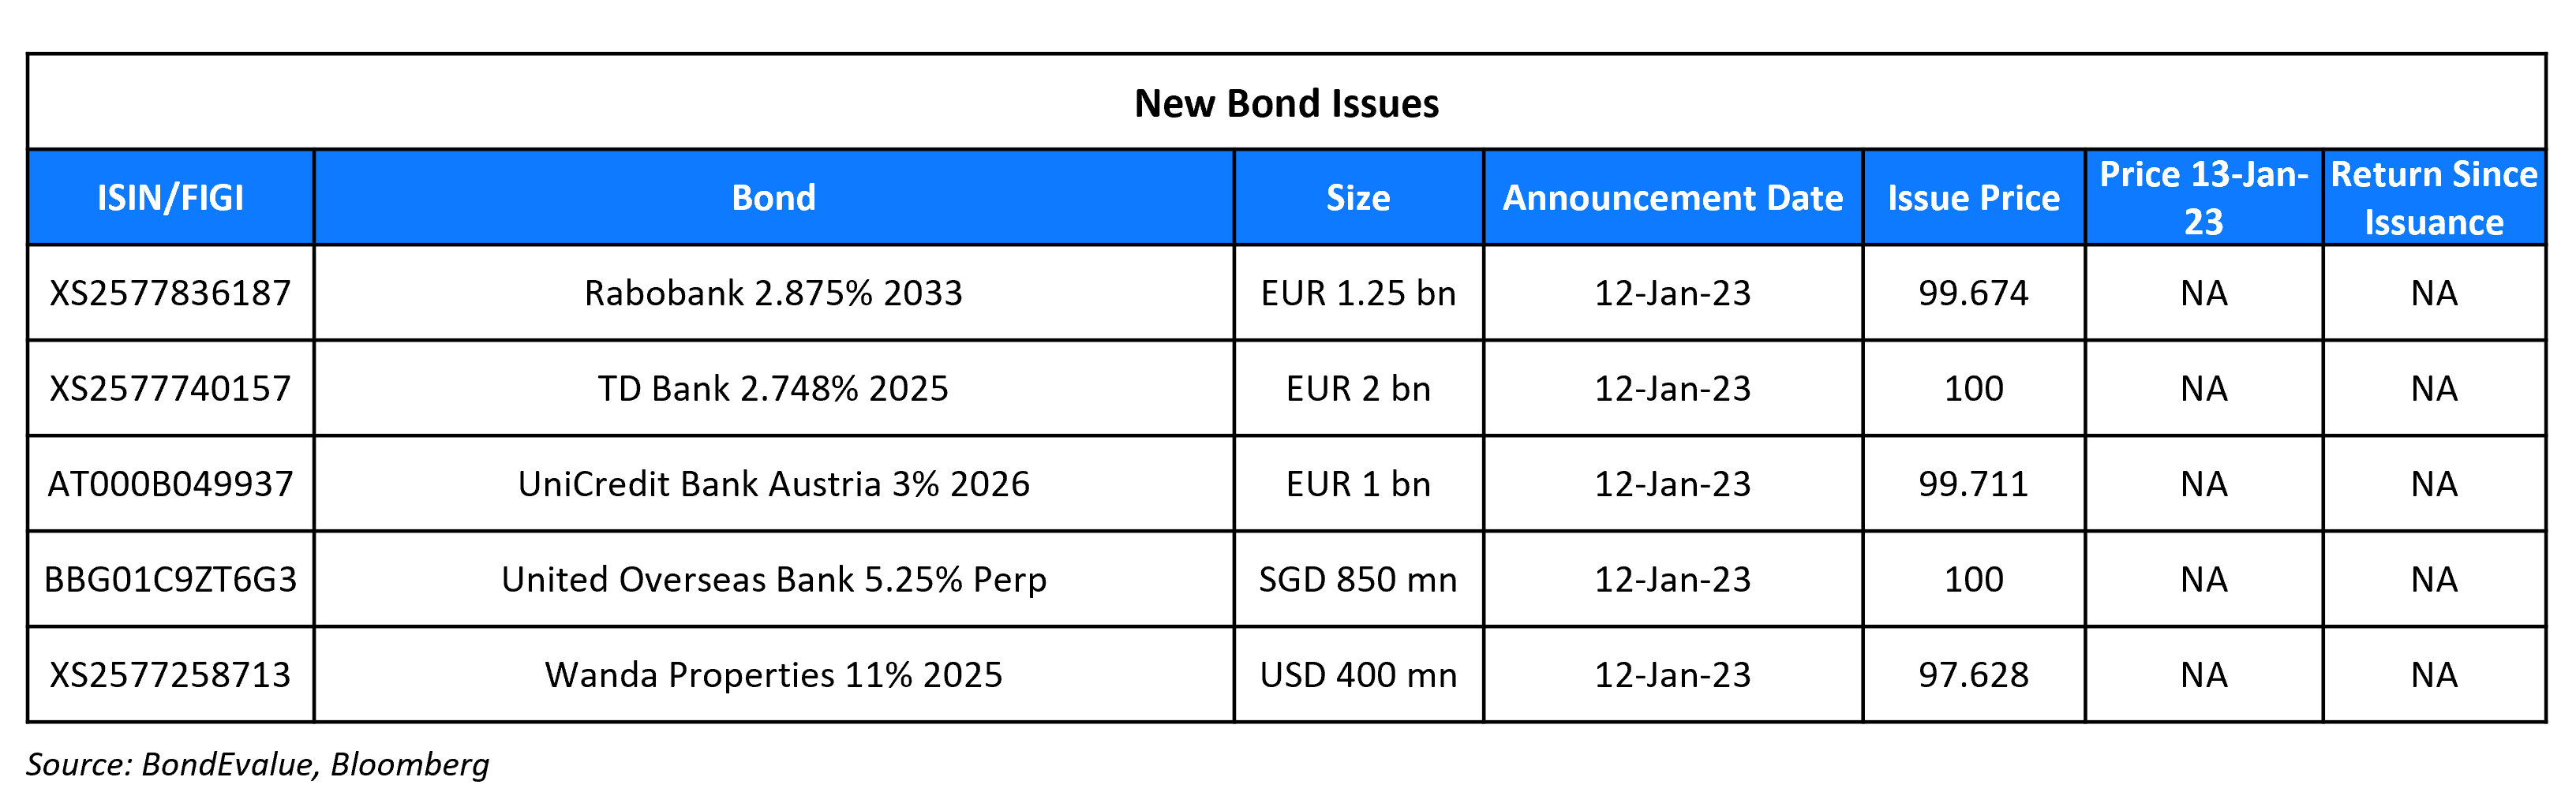 New Bond Issues 13 Jan 23